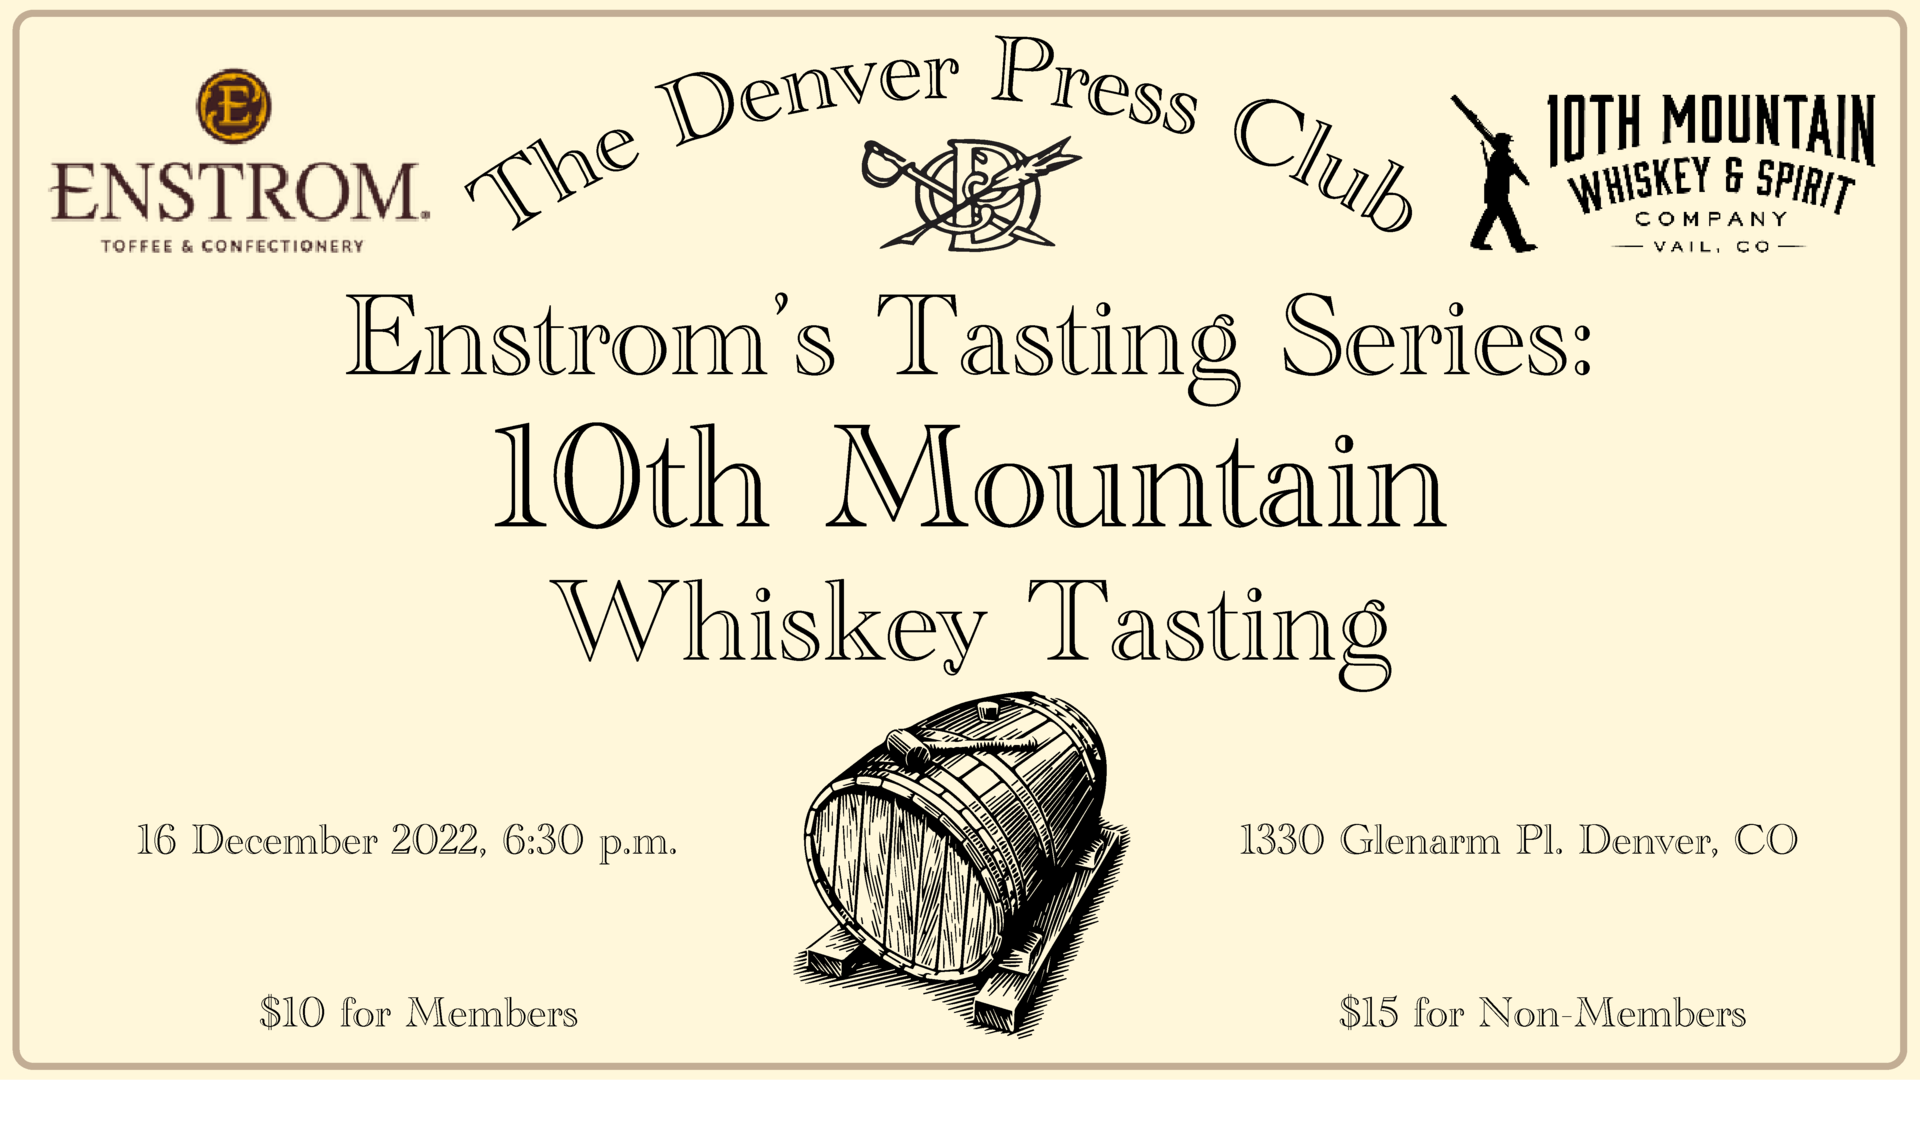  Enstrom Tasting Series: 10th Mountain Whiskey at the Denver Press Club